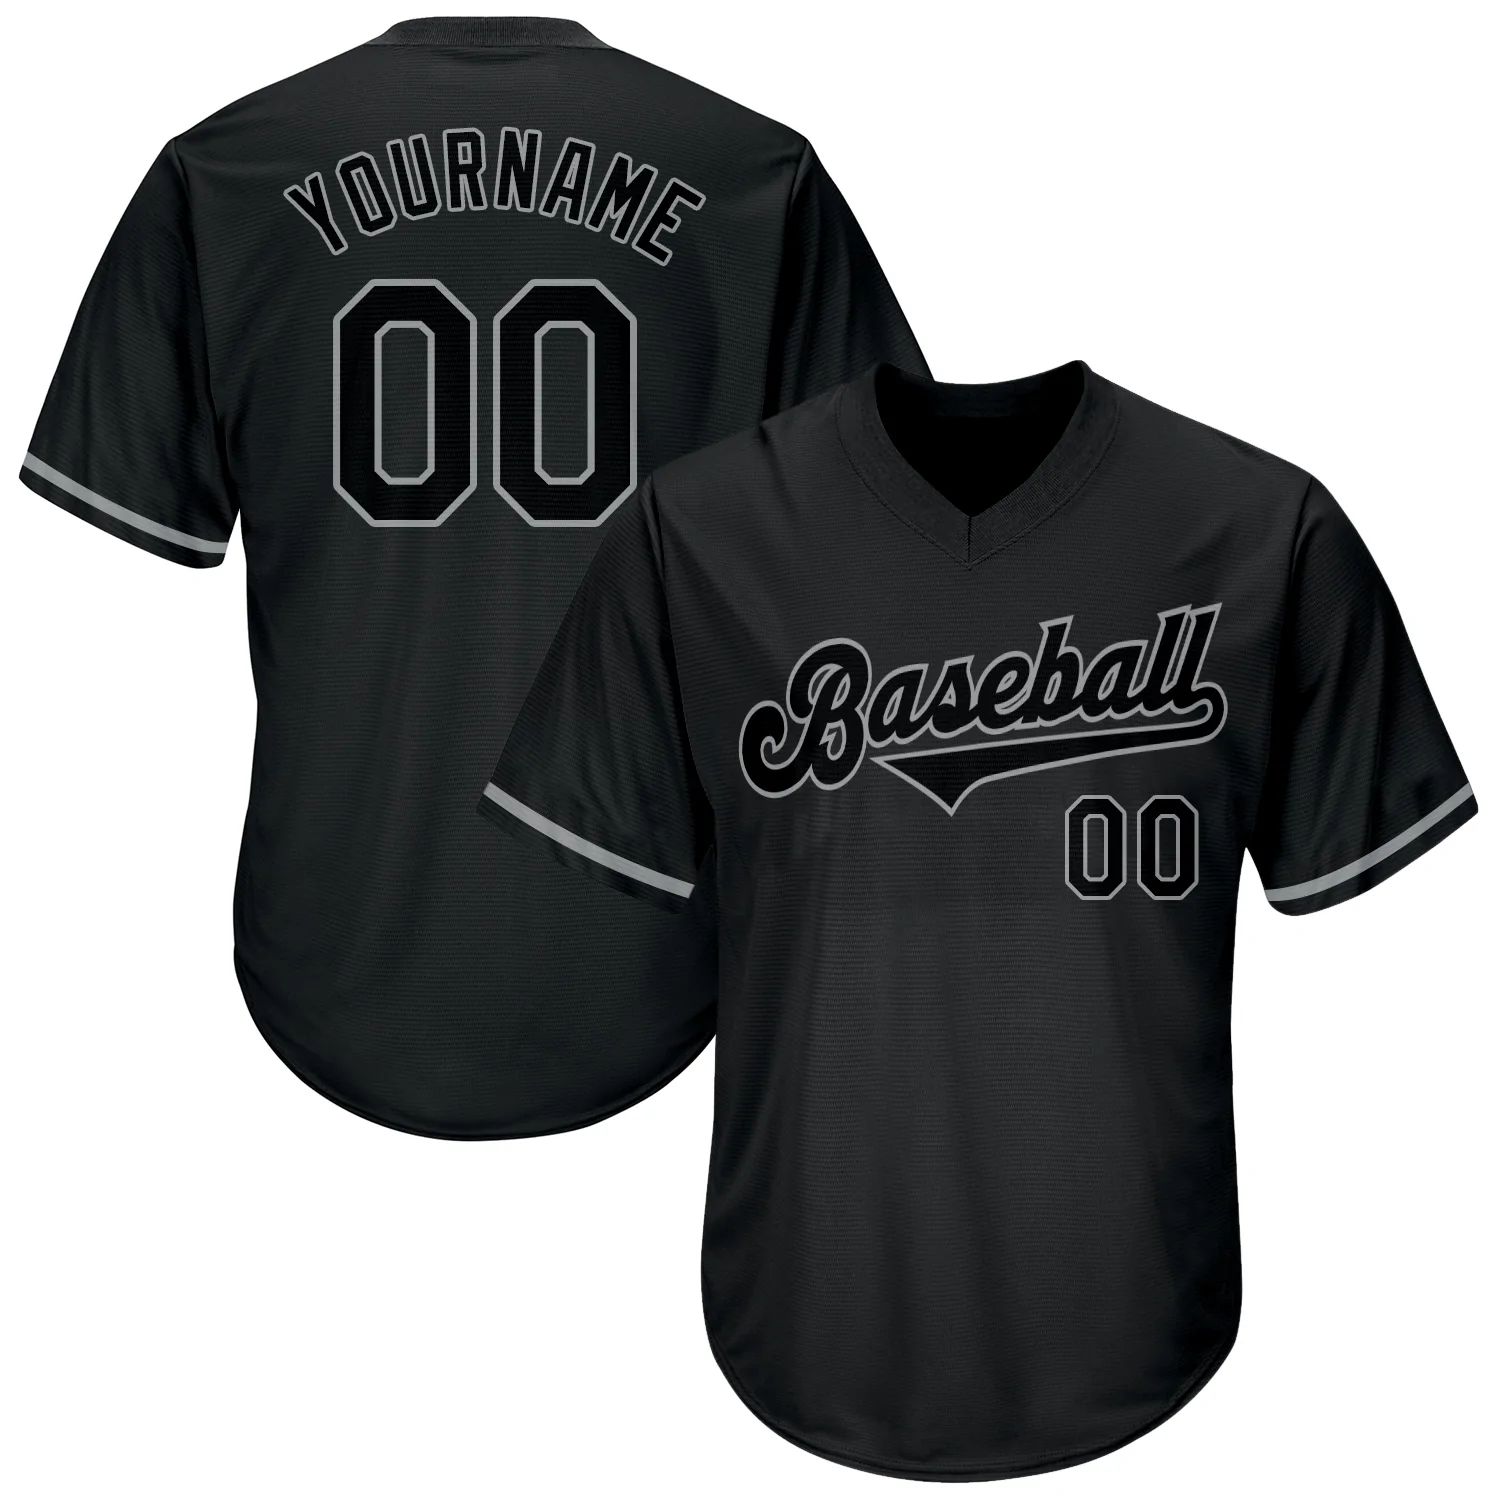 build-gray-black-baseball-black-jersey-authentic-throwback-eblack00976-online-1.jpg